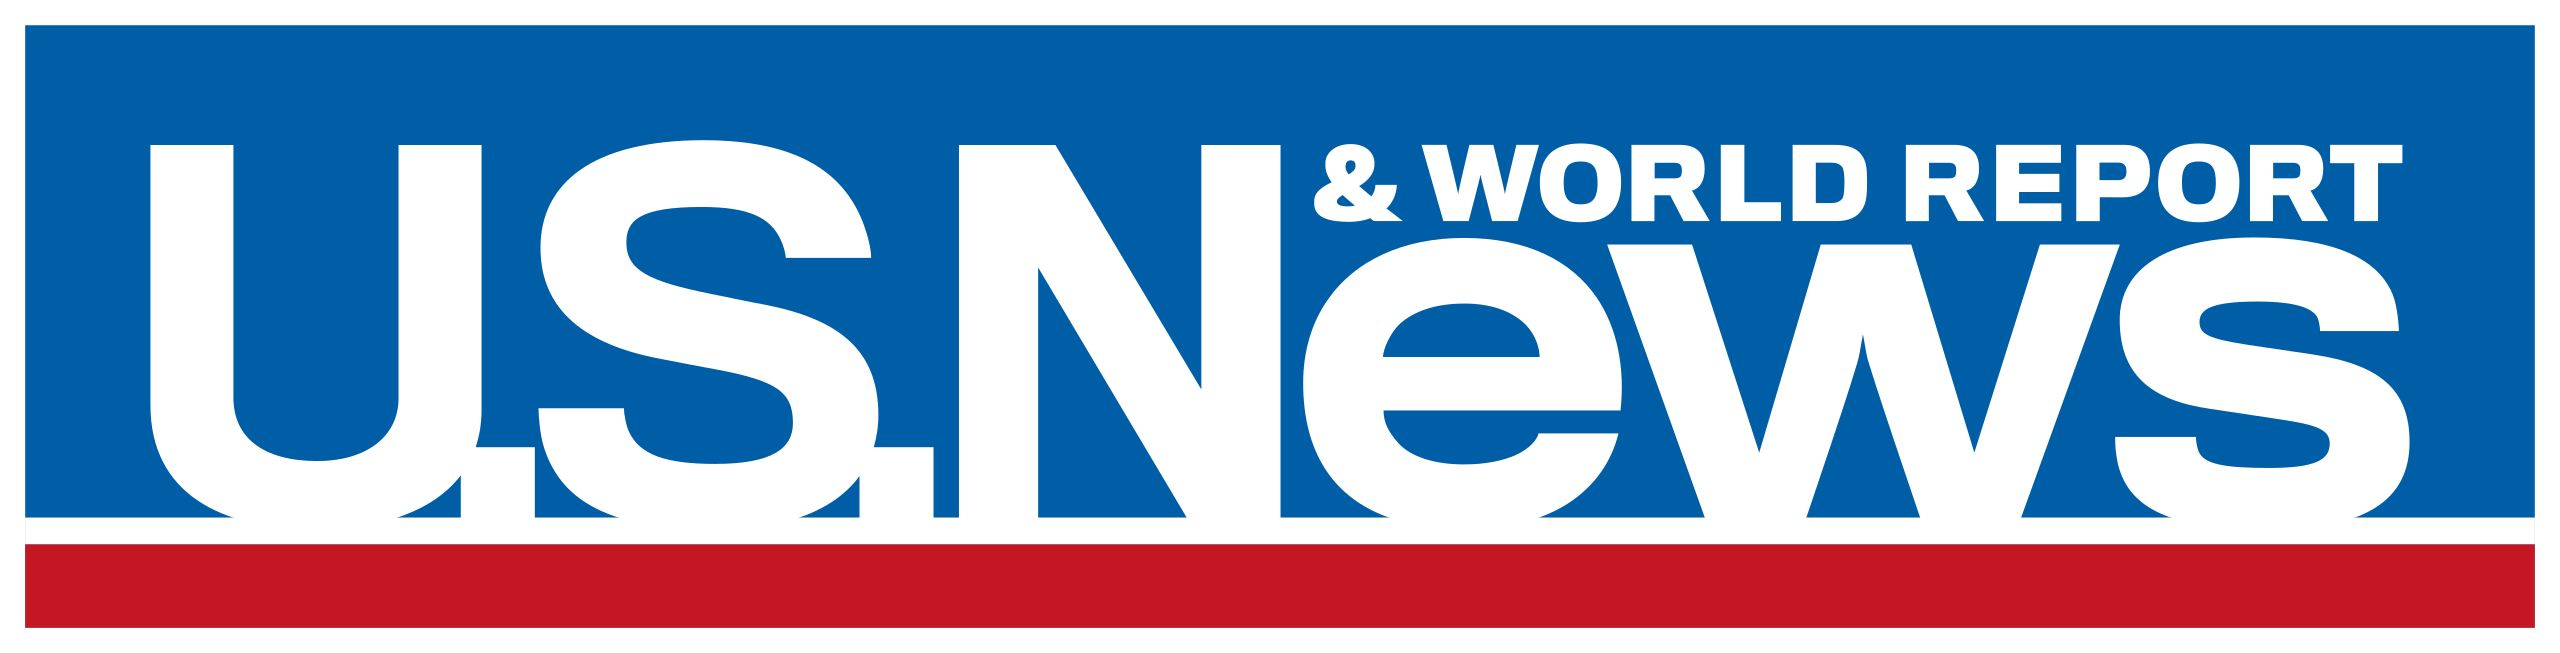 U.S._News_&_World_Report_logo.svg